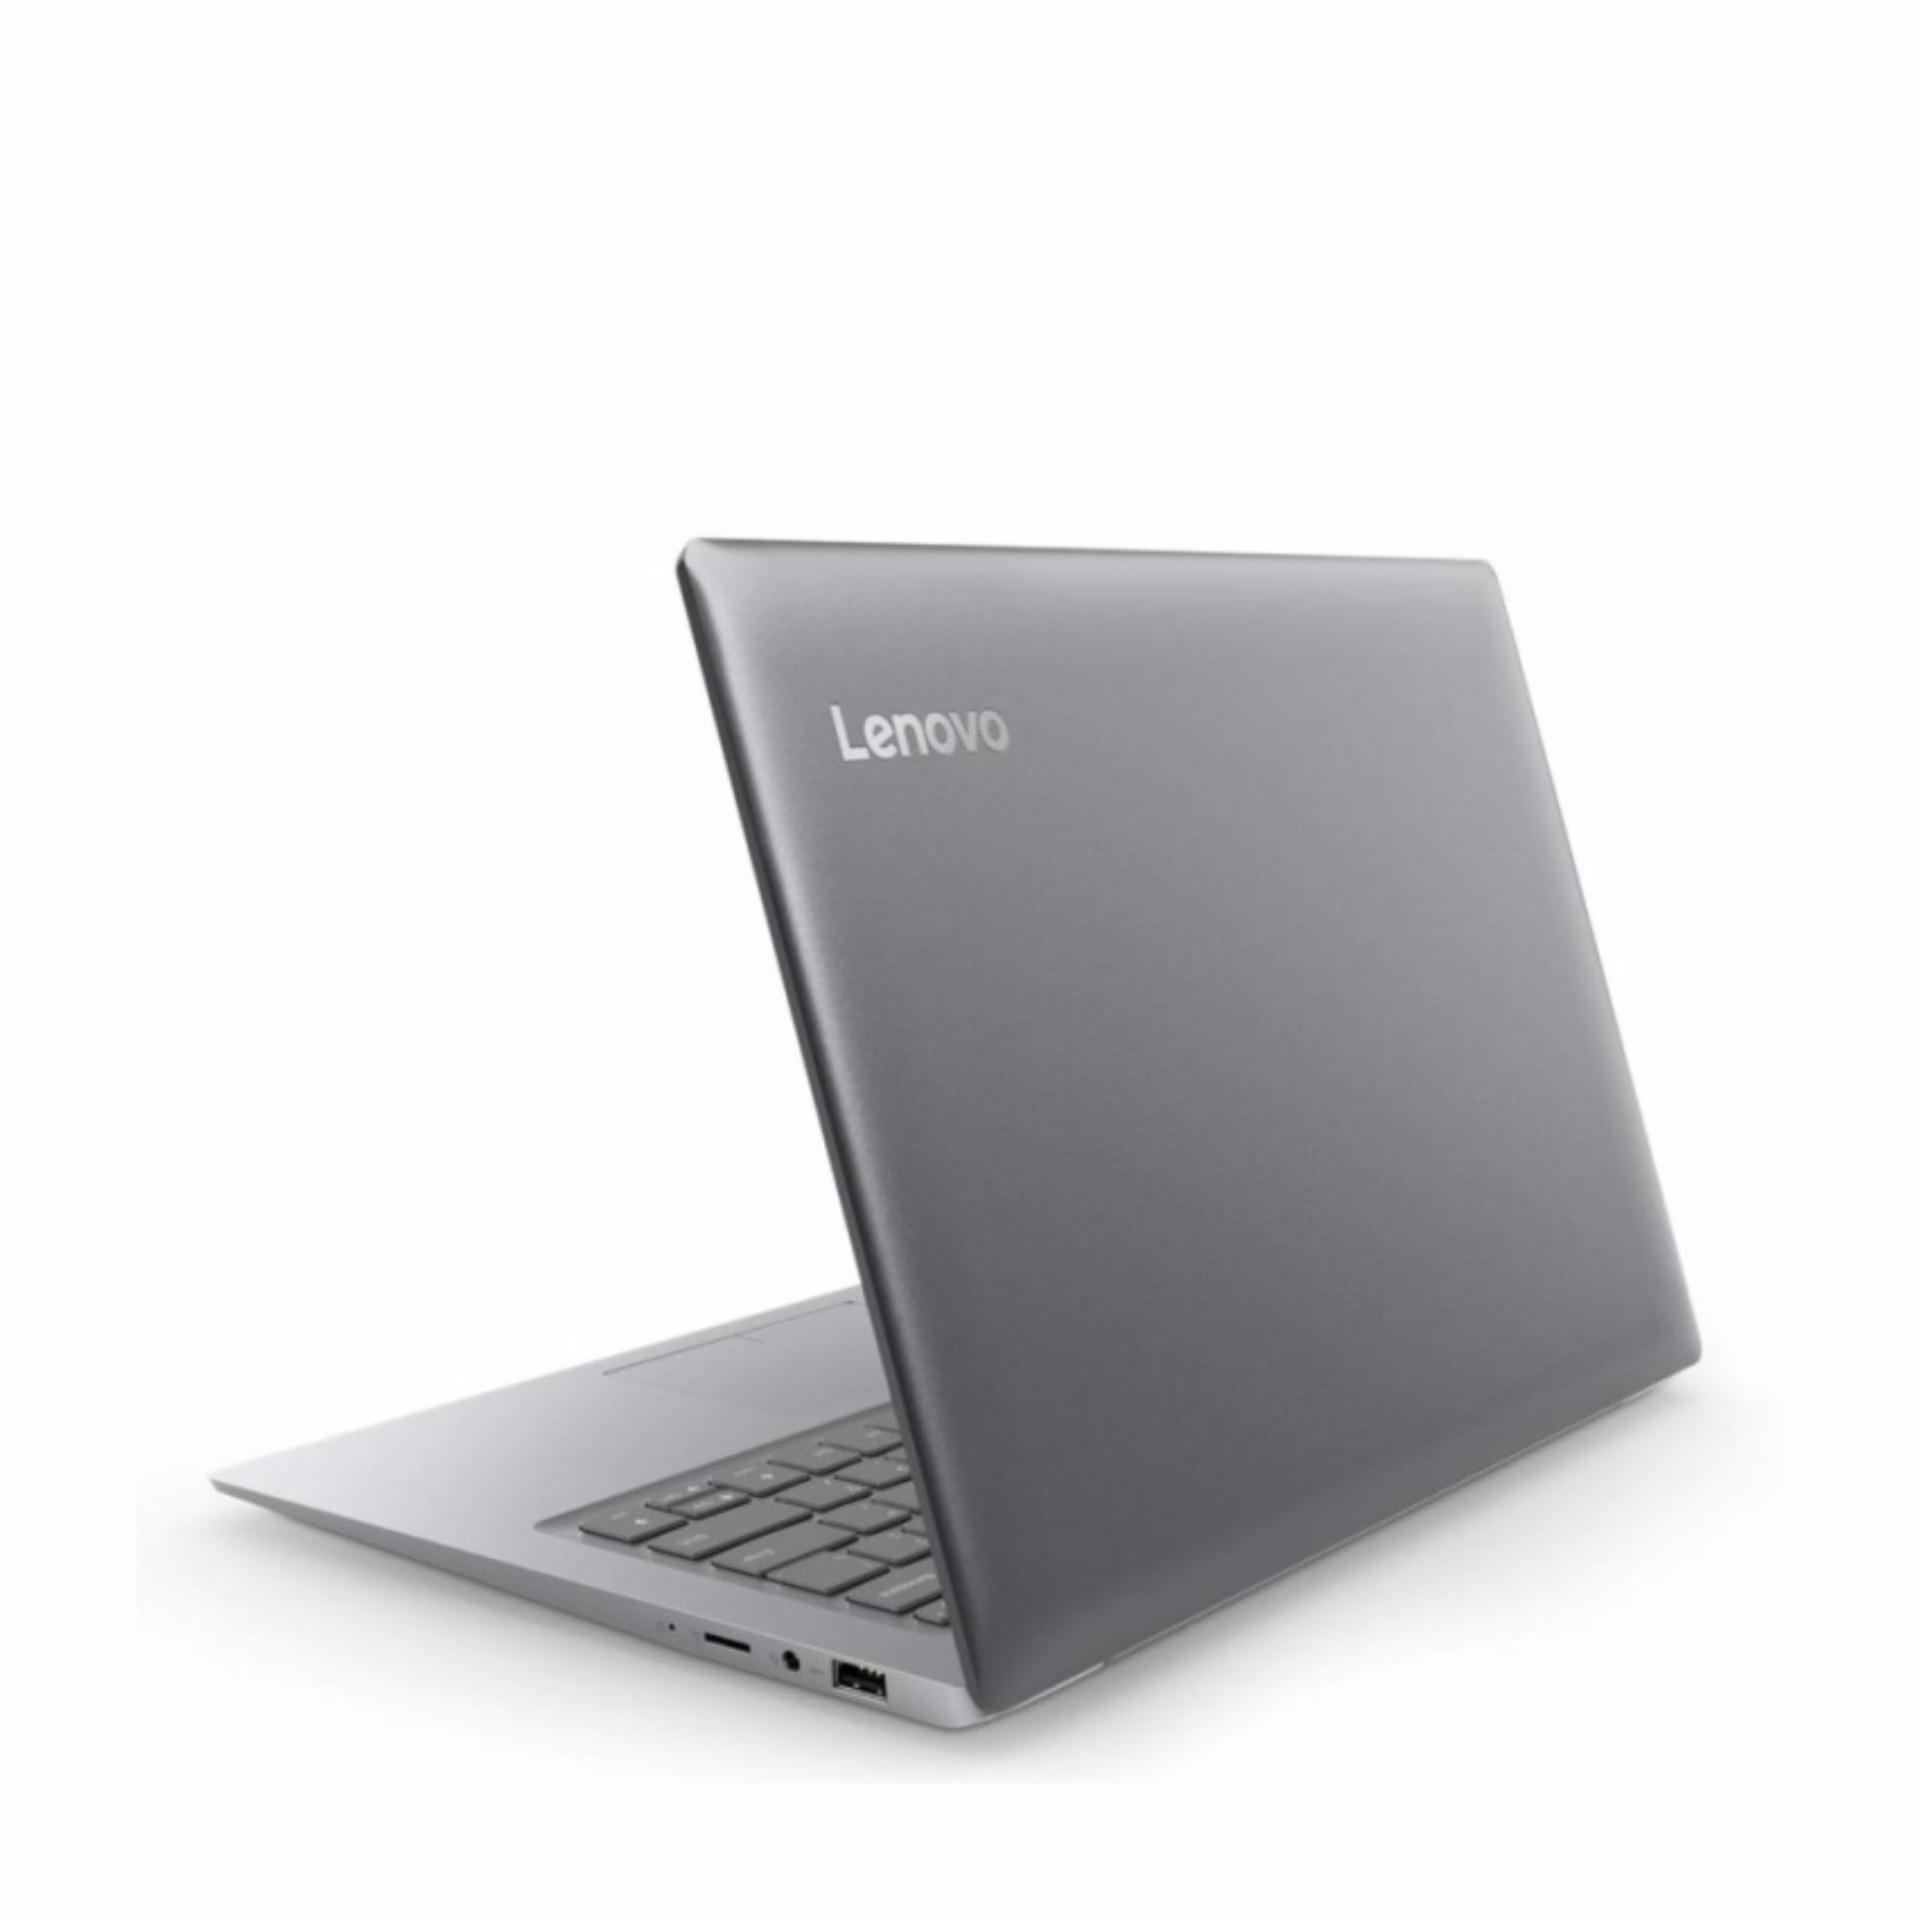 Lenovo IdeaPad 120S-11IAP INTEL® CELERON® N3350 PROCESSOR Graphic: INTEGRATED 4G LPDDR4 2400 ONBOARD 32G eMMC